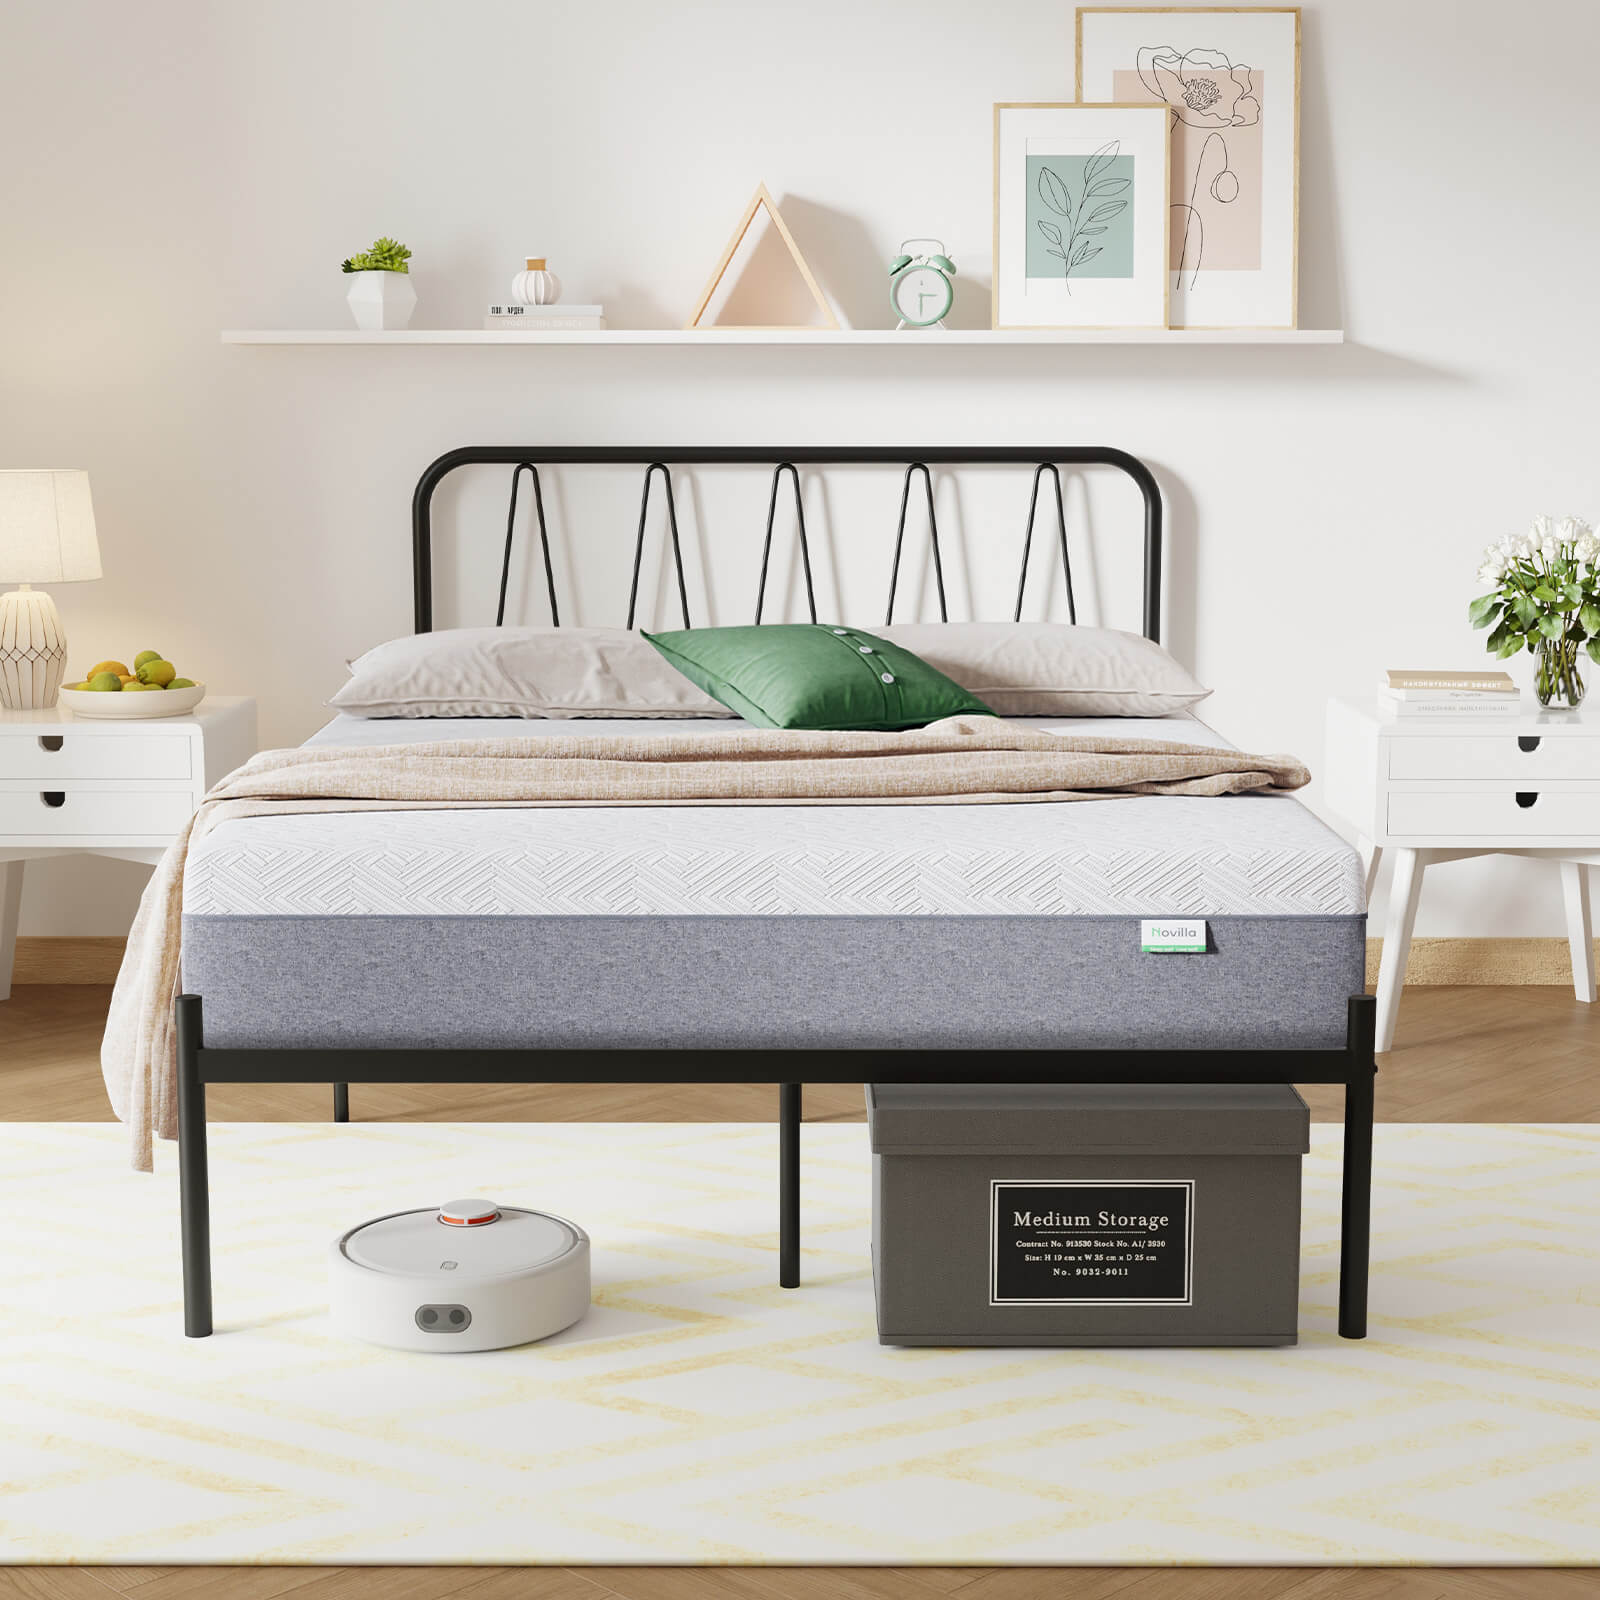 Slip Number Bed: Customize Your Sleep Comfort - 1